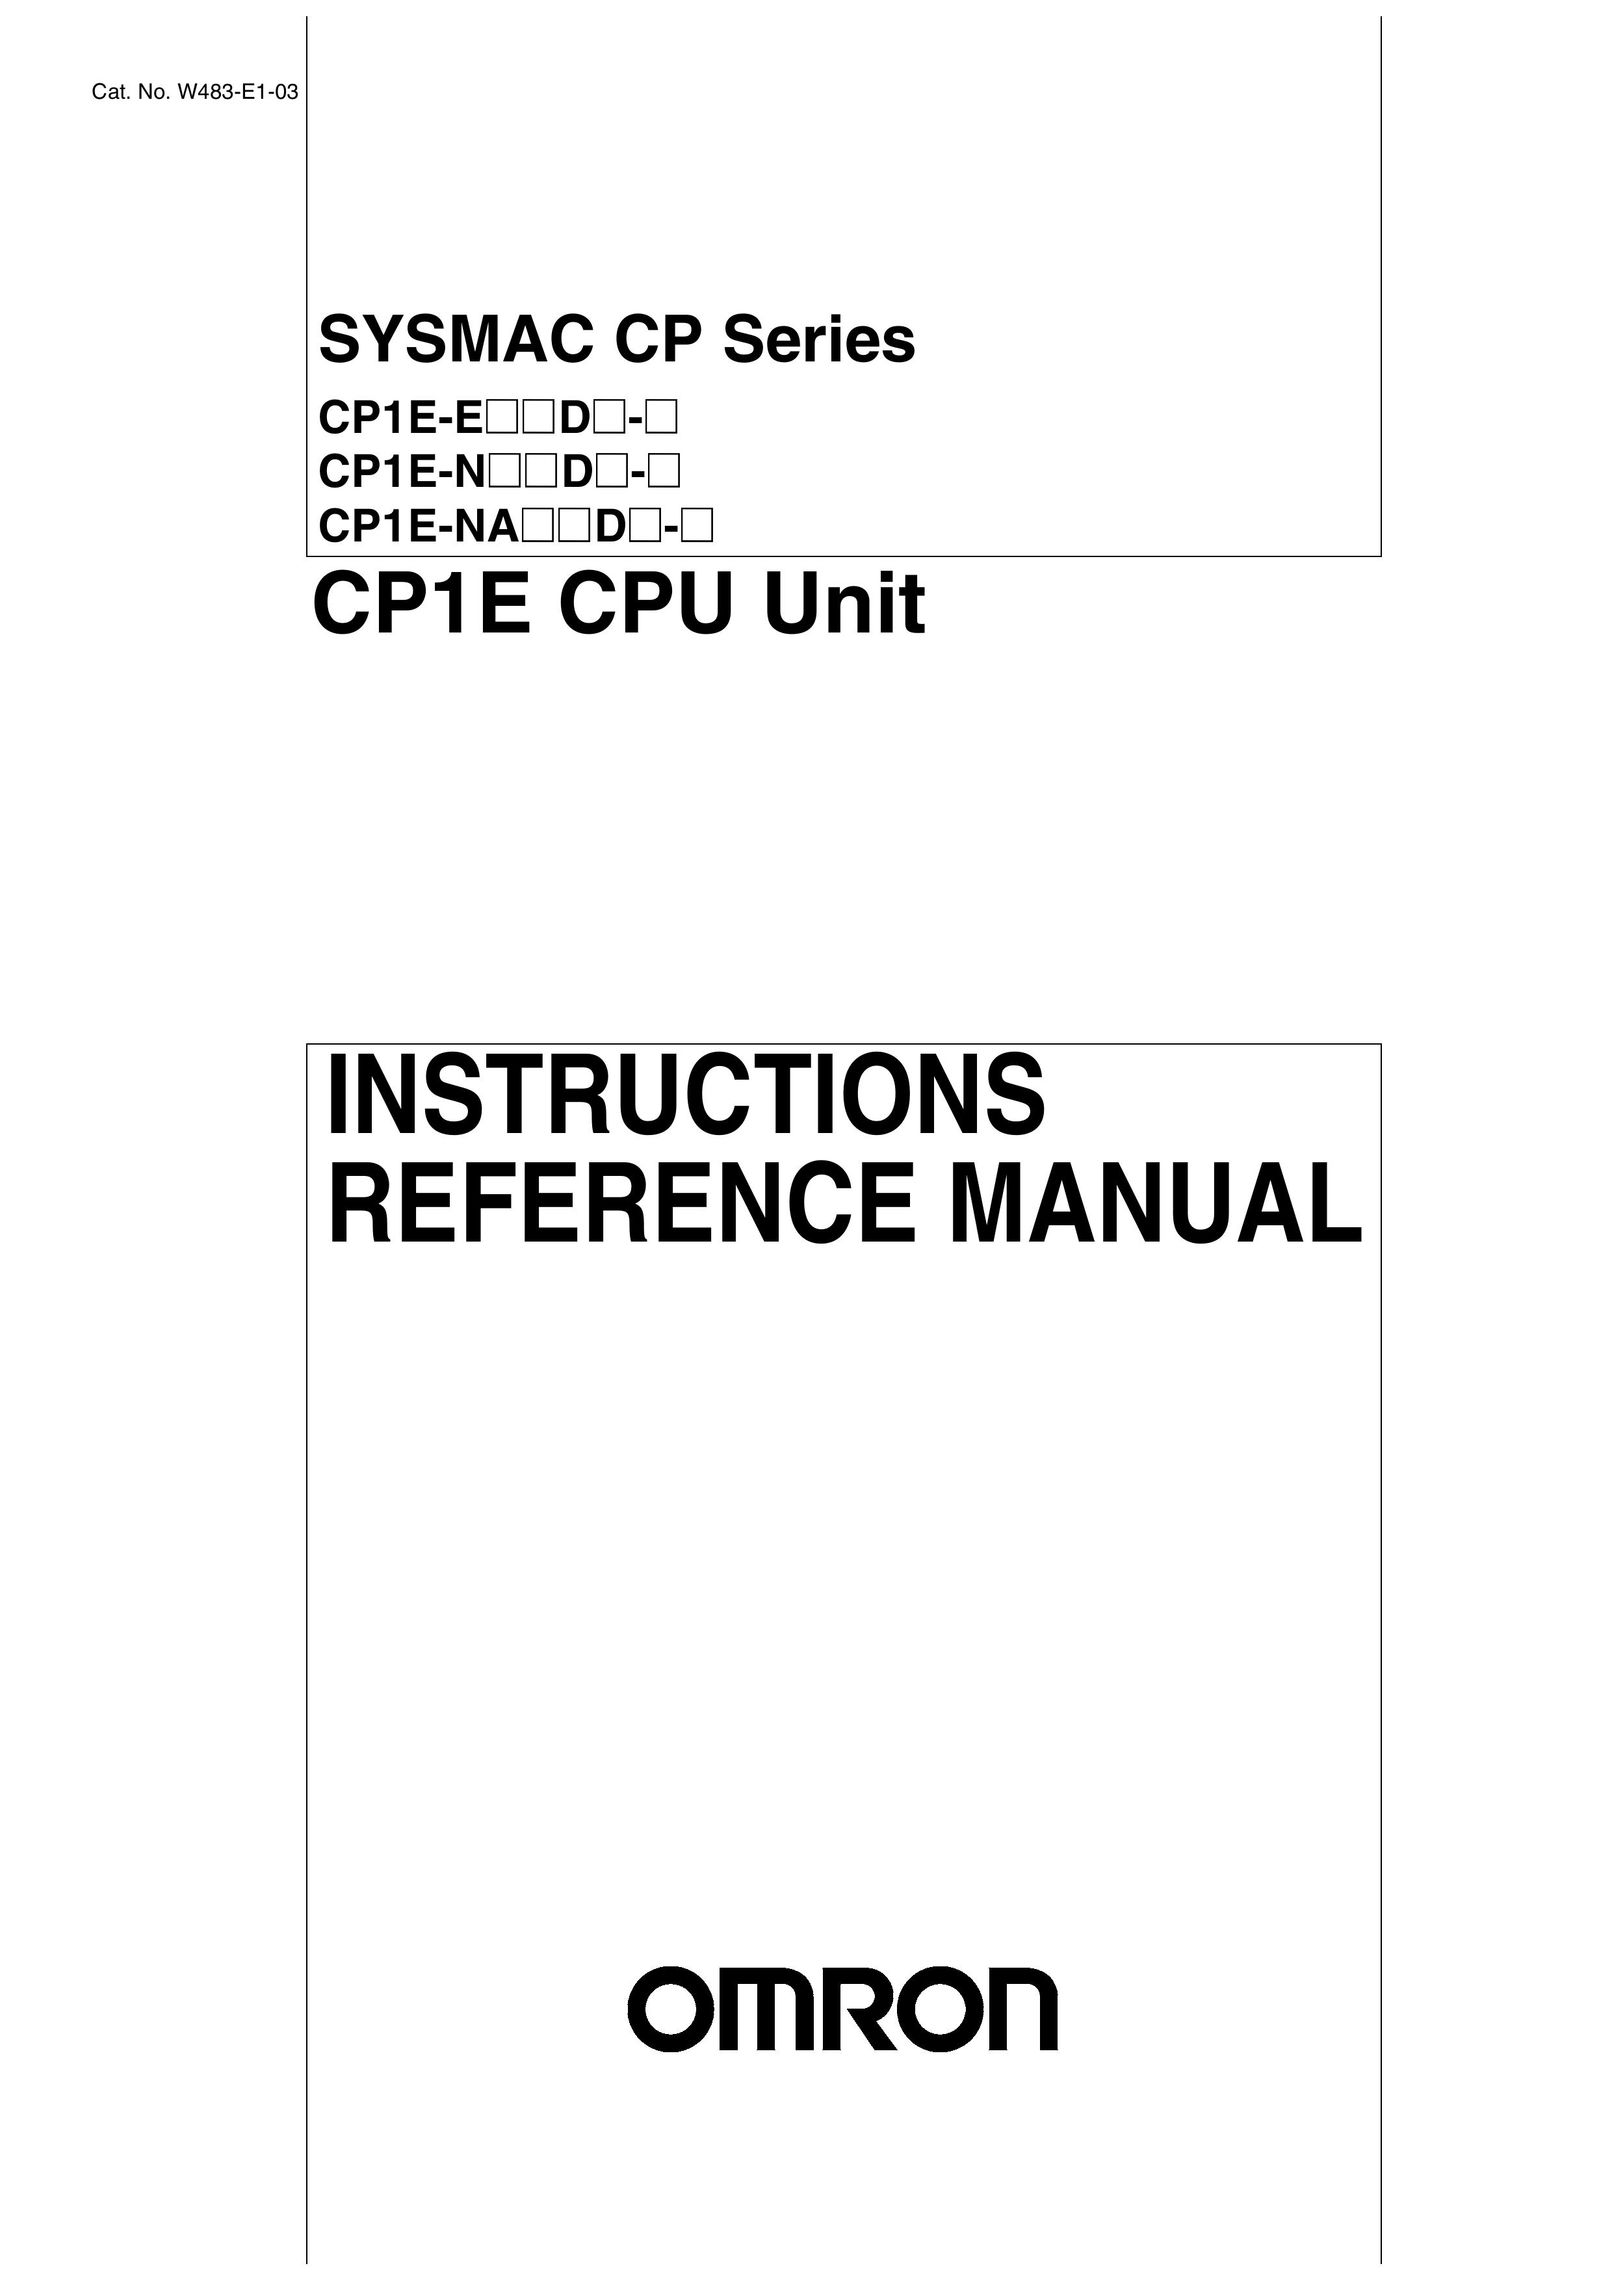 Omron CP1E-NA@@D@-@ Computer Hardware User Manual